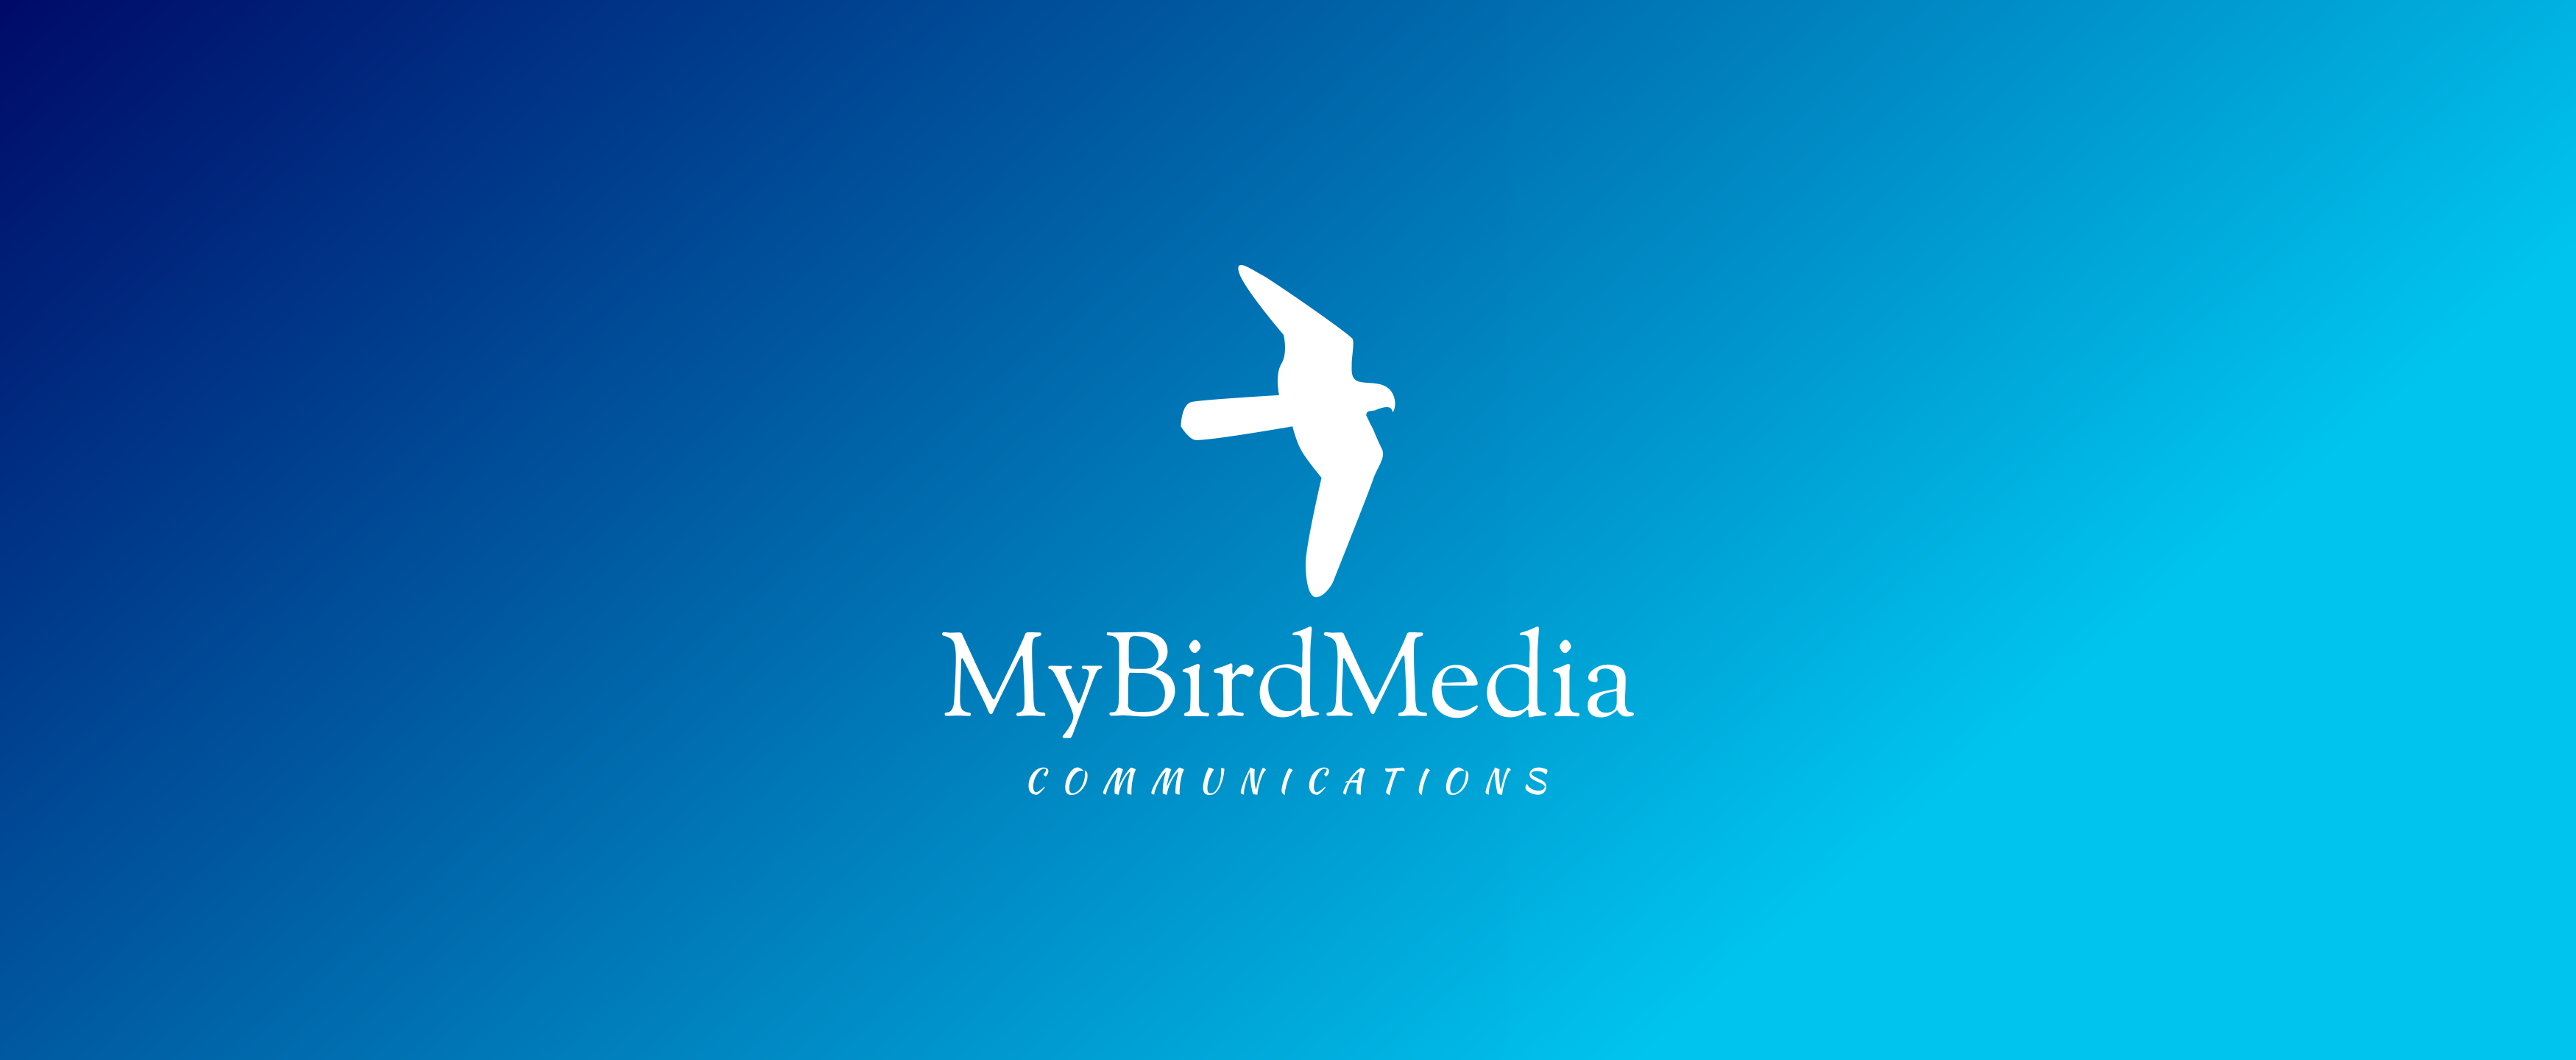 MyBirdMedia